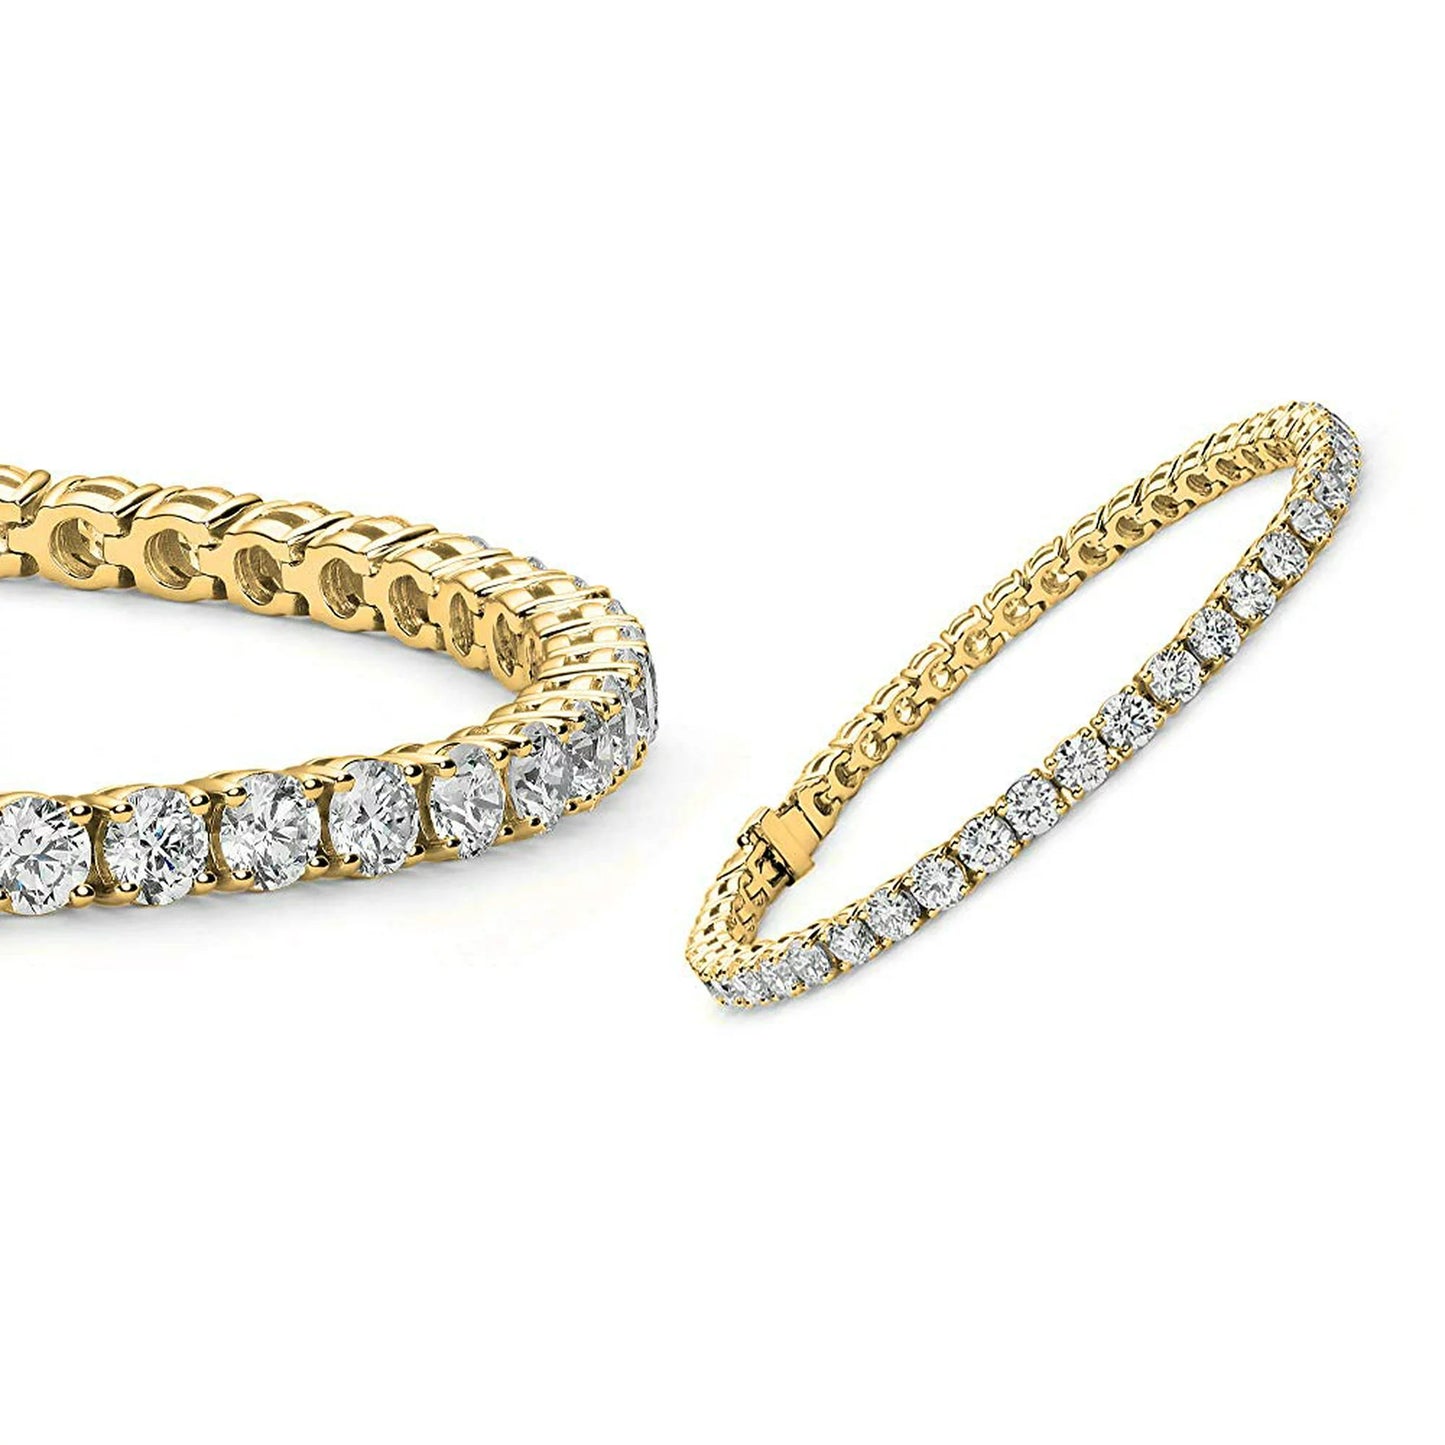 Livia 18k Yellow Gold Tennis Bracelet with Cubic Zirconia Crystals - 7.5" Sparkling Stone Wrist Wrap